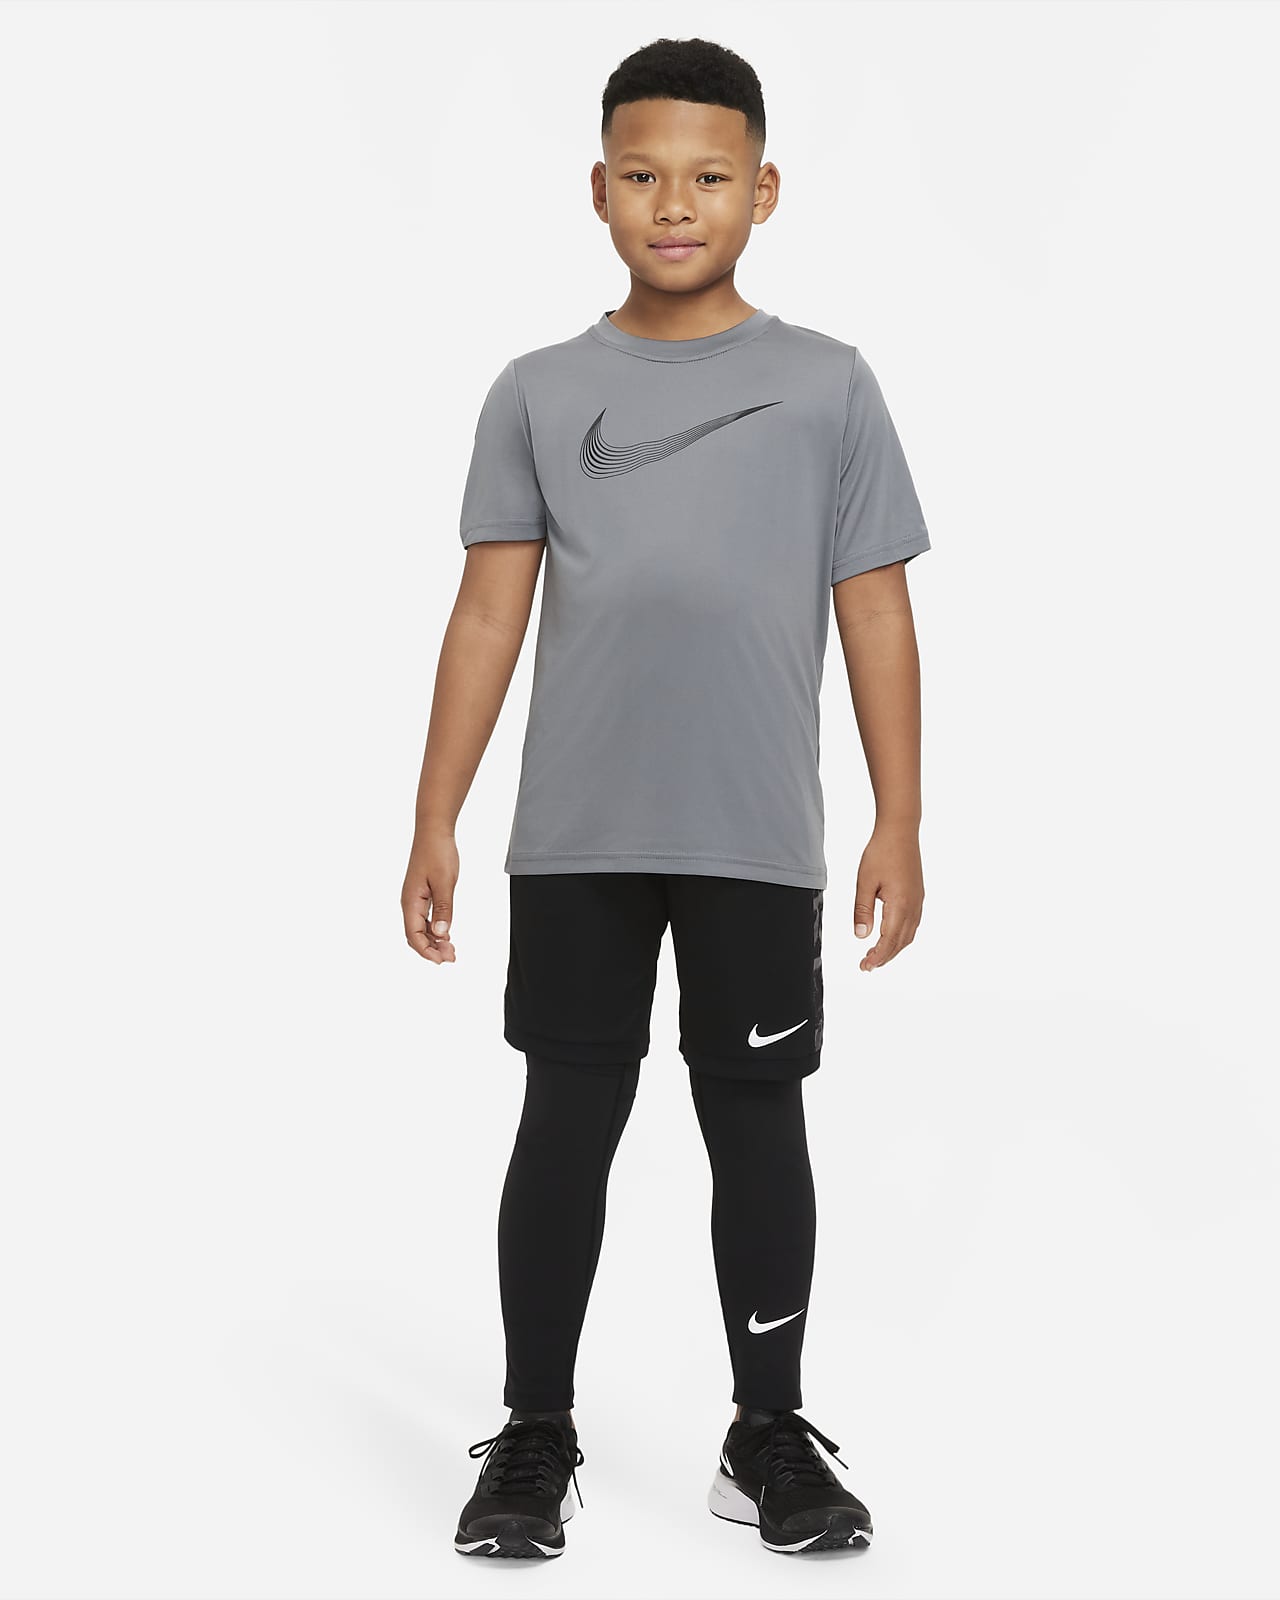 Nike (Big Boys) Boy's Pro Warm Graphic Training Tights Black X-Large